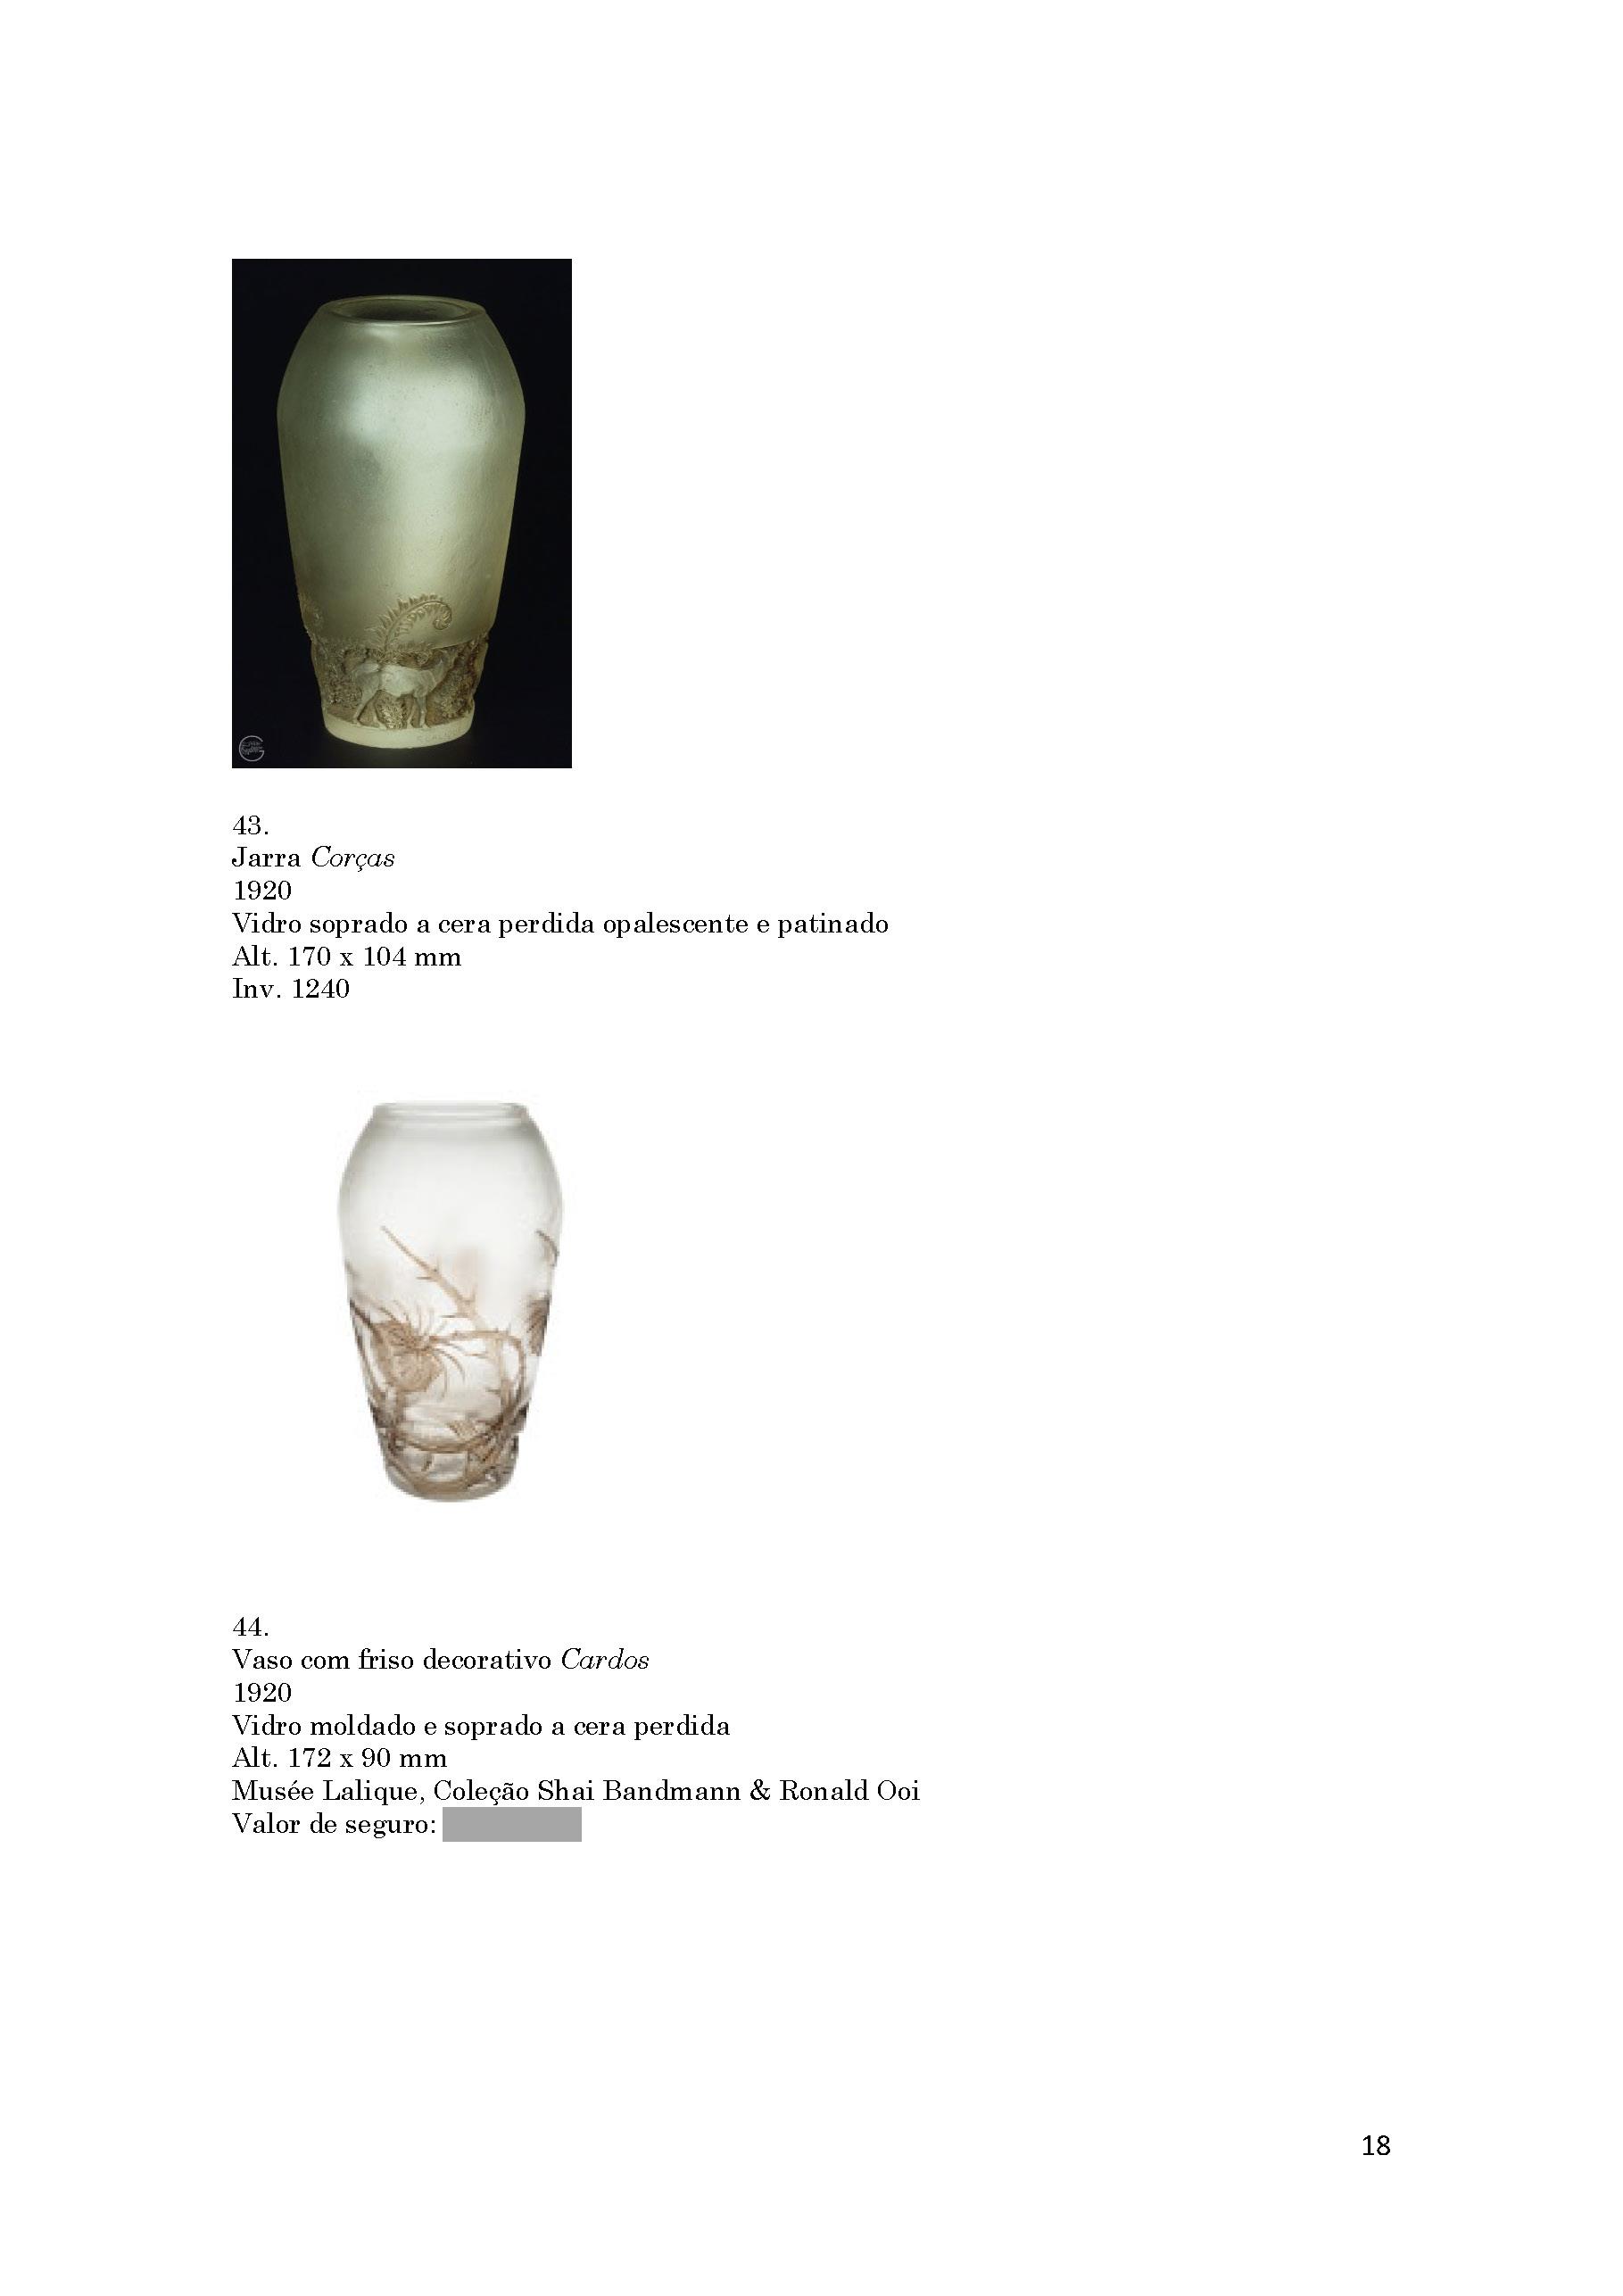 Lista_Vidros_Lalique_25.09.2020_1.18